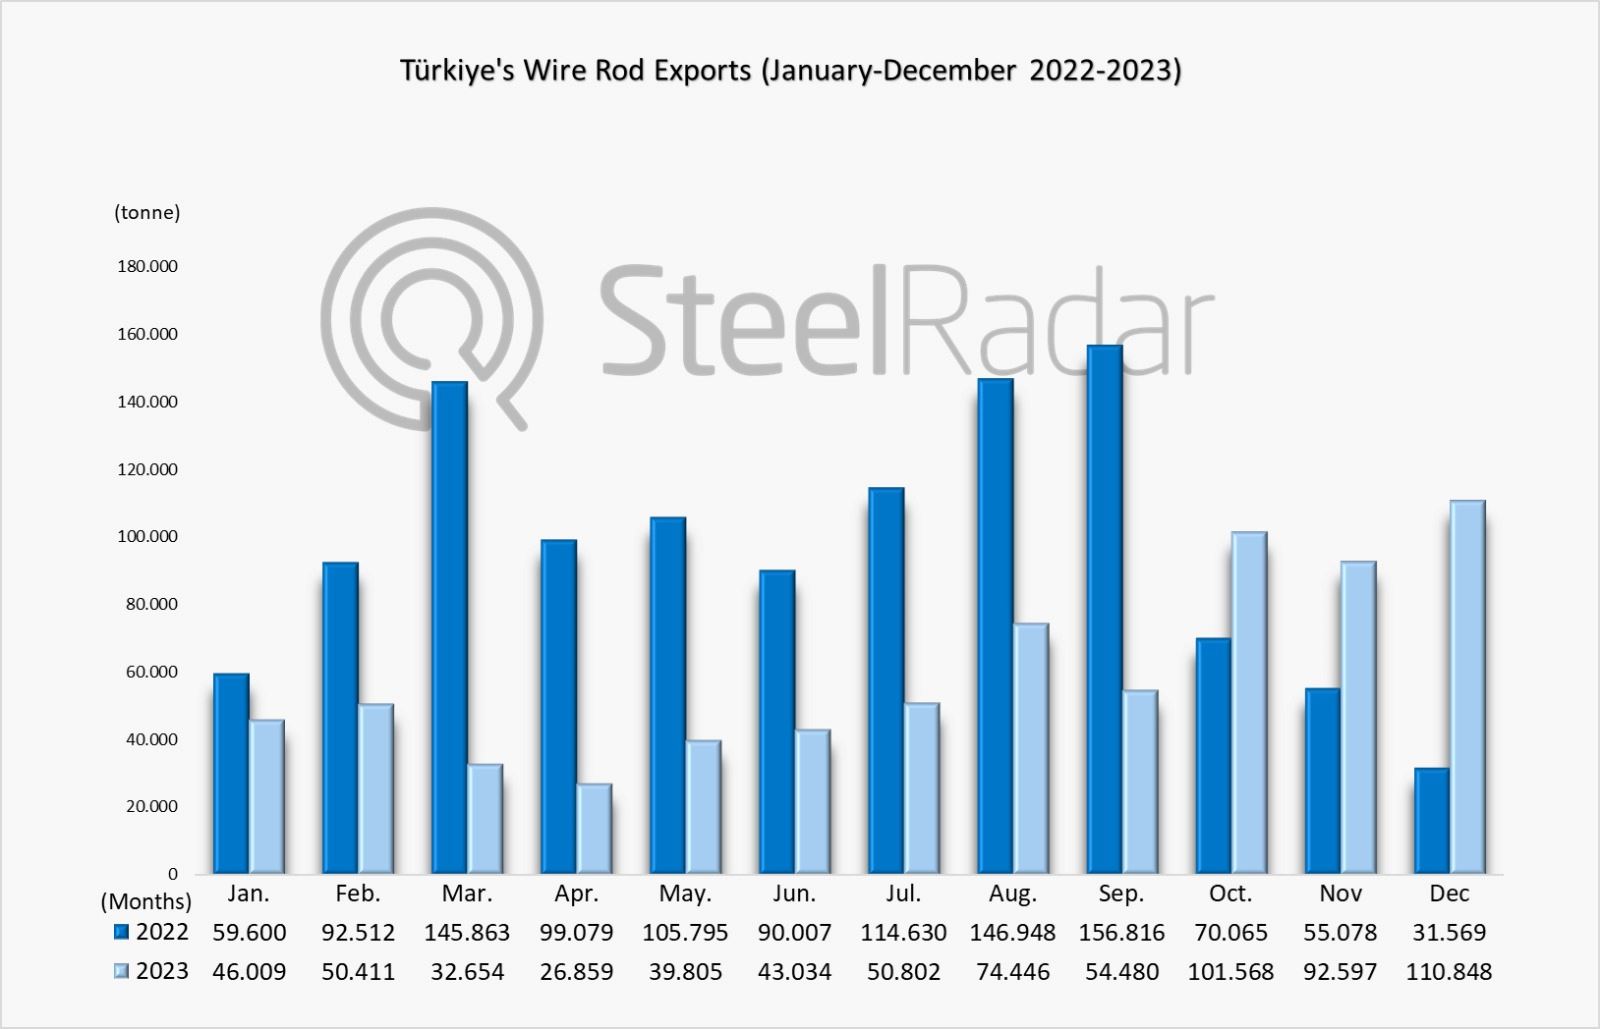 Türkiye's wire rod exports decreased by 38.05% in 2023.